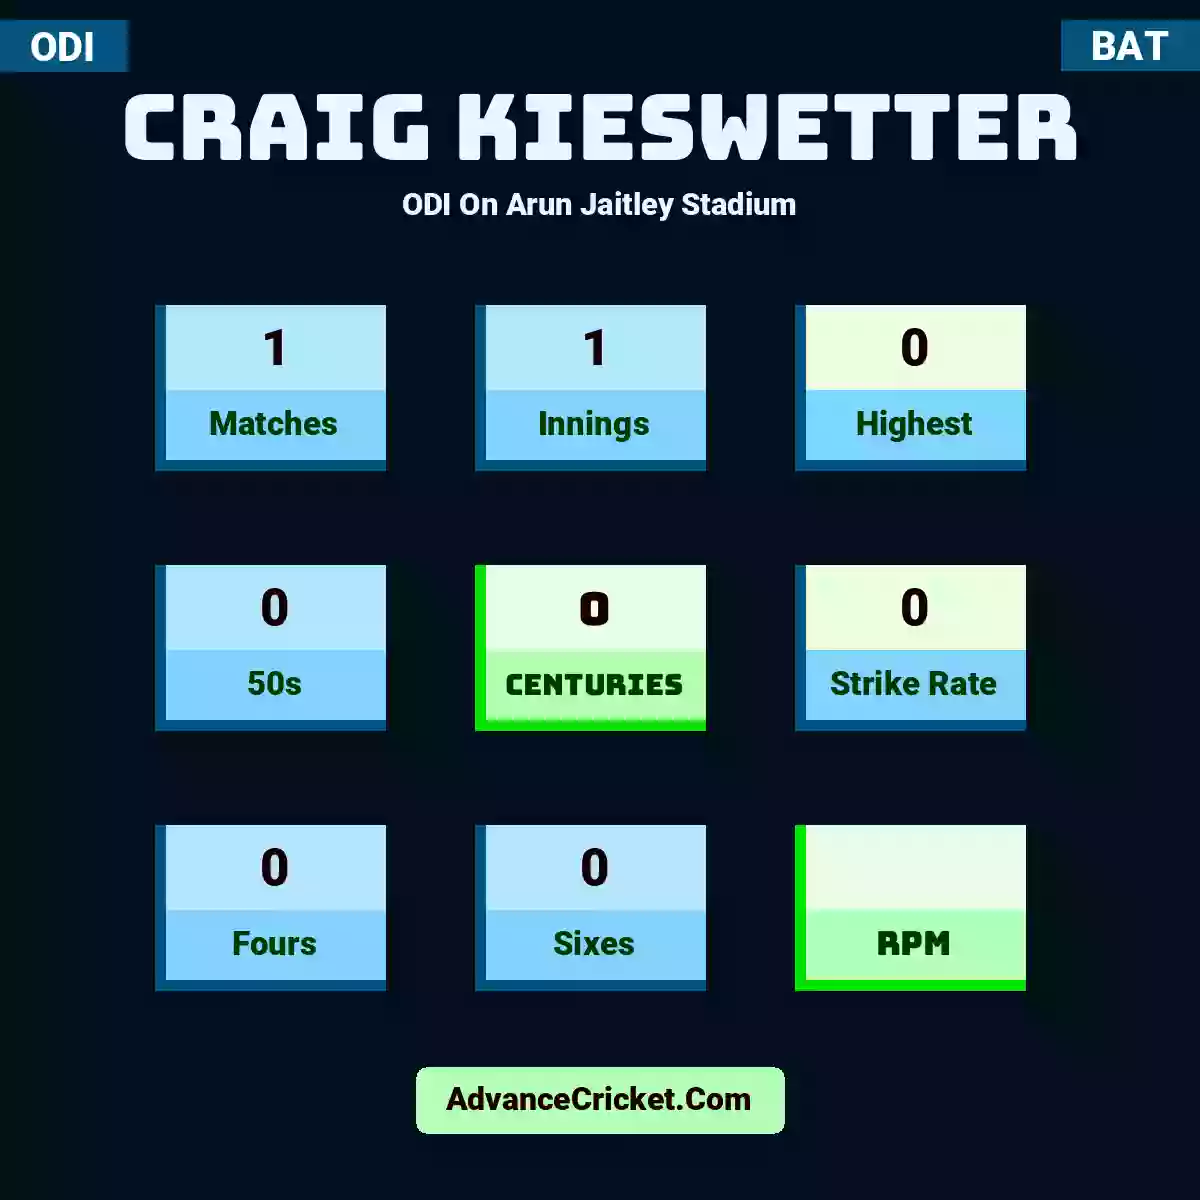 Craig Kieswetter ODI  On Arun Jaitley Stadium, Craig Kieswetter played 1 matches, scored 0 runs as highest, 0 half-centuries, and 0 centuries, with a strike rate of 0. C.Kieswetter hit 0 fours and 0 sixes.